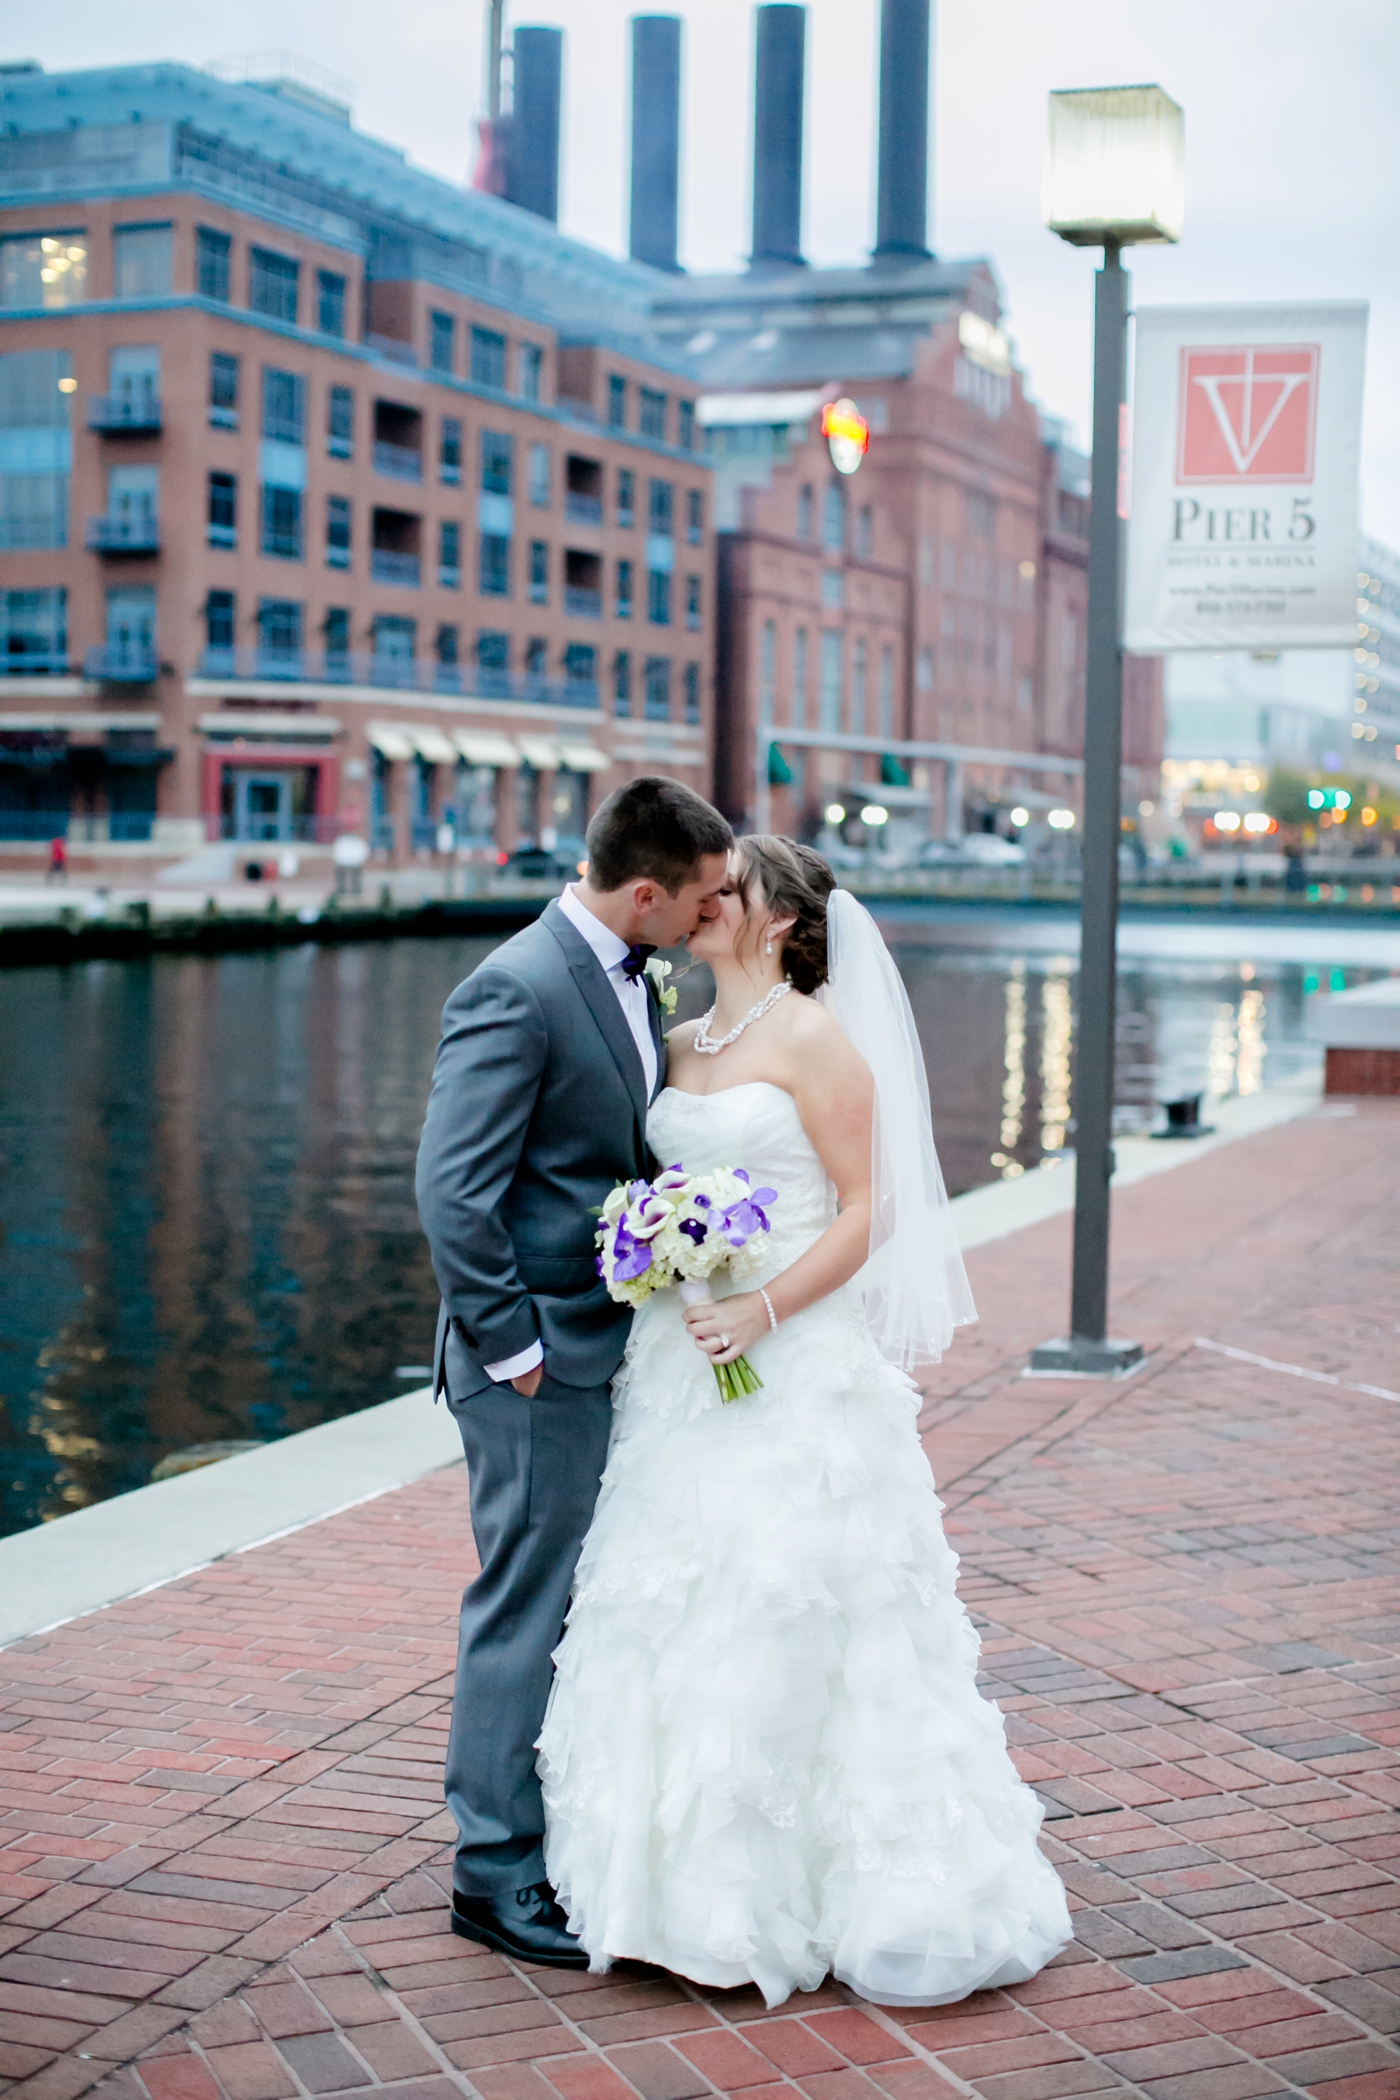 50A-Pier-5-Wedding-Baltimore-Maryland-1162